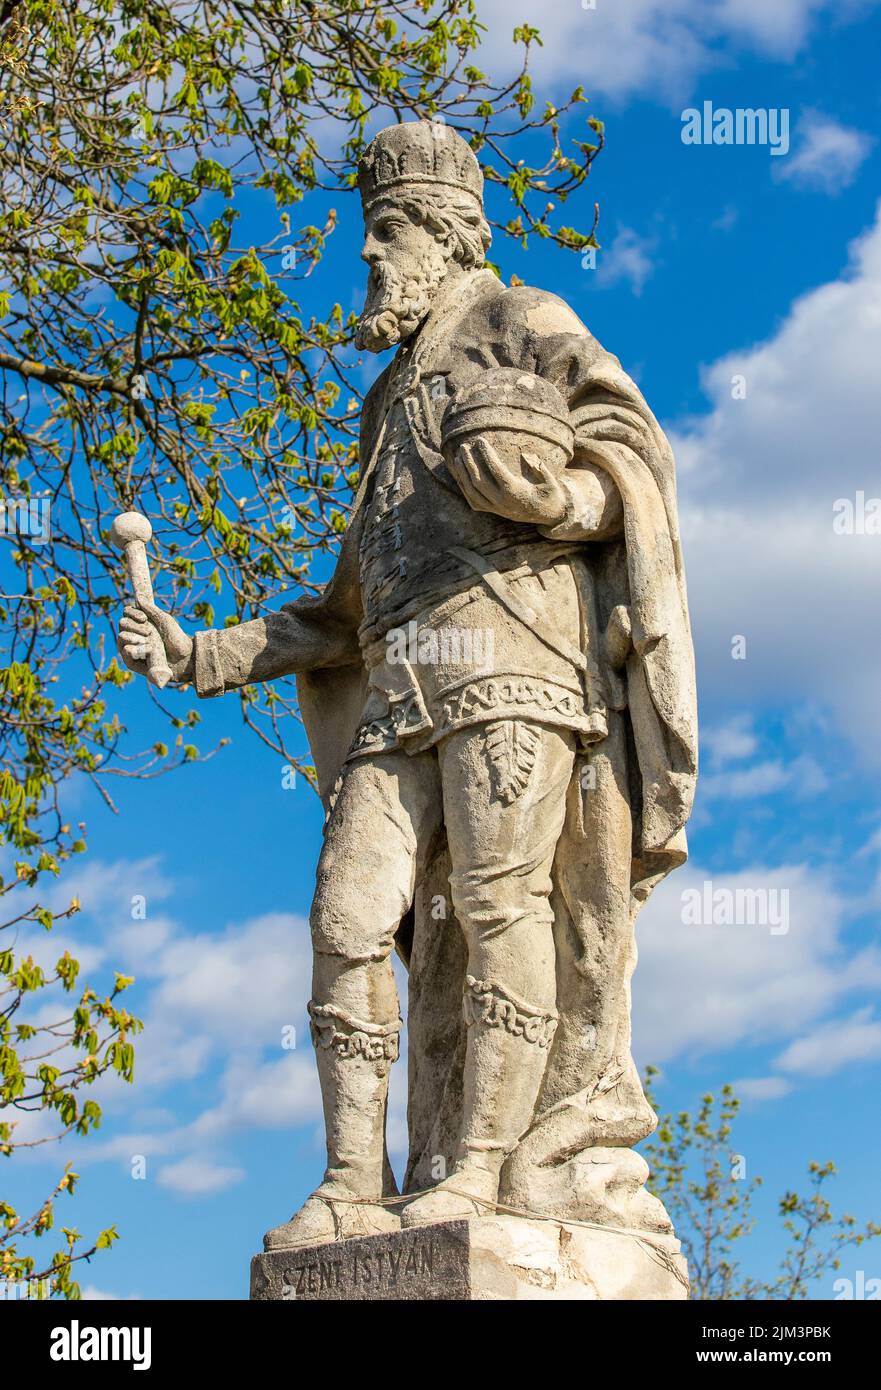 A statue of Saint Stephen (Istvan) in the city of Esztergom - Hungary Stock Photo